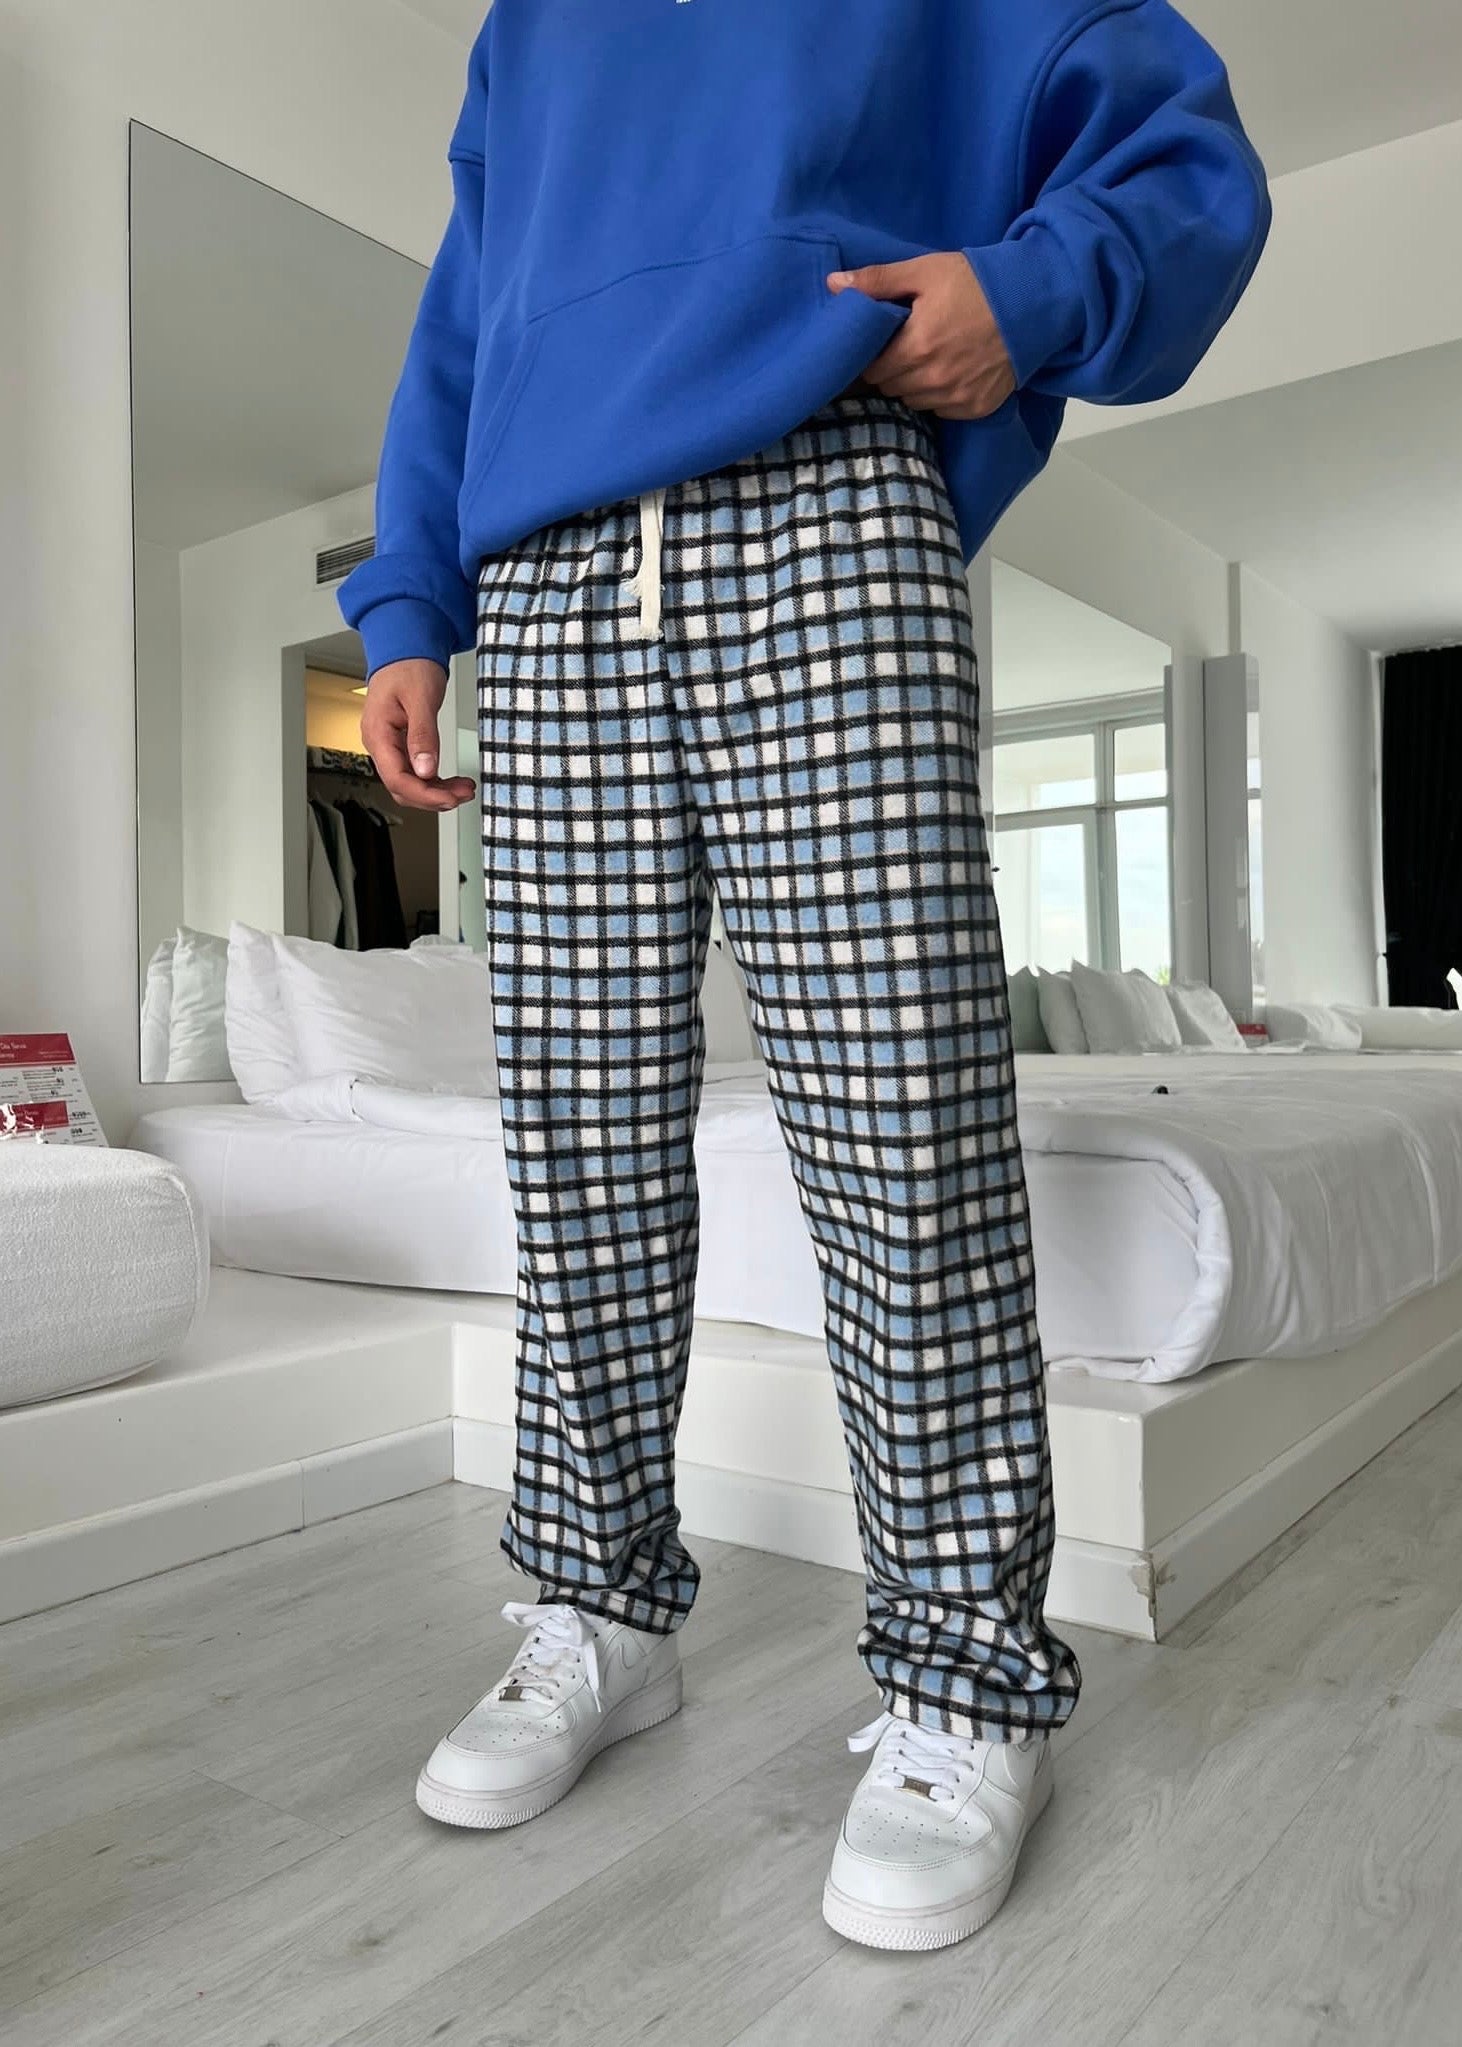 Pijama Blue And White Pattern - Clothing Lab